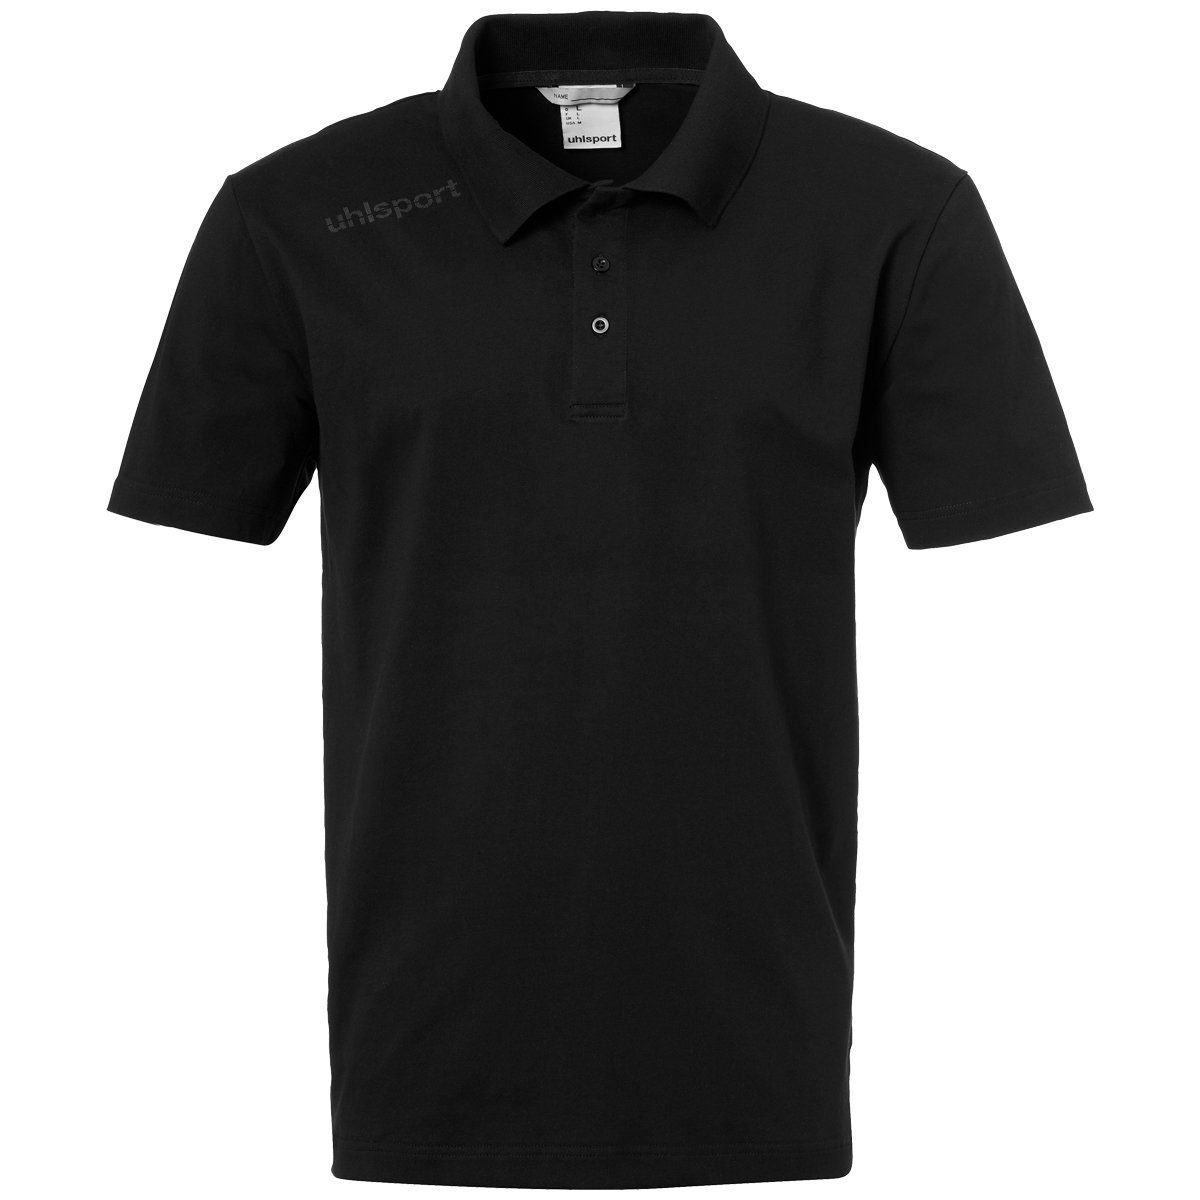 uhlsport Poloshirt uhlsport POLO SHIRT ESSENTIAL schwarz | T-Shirts